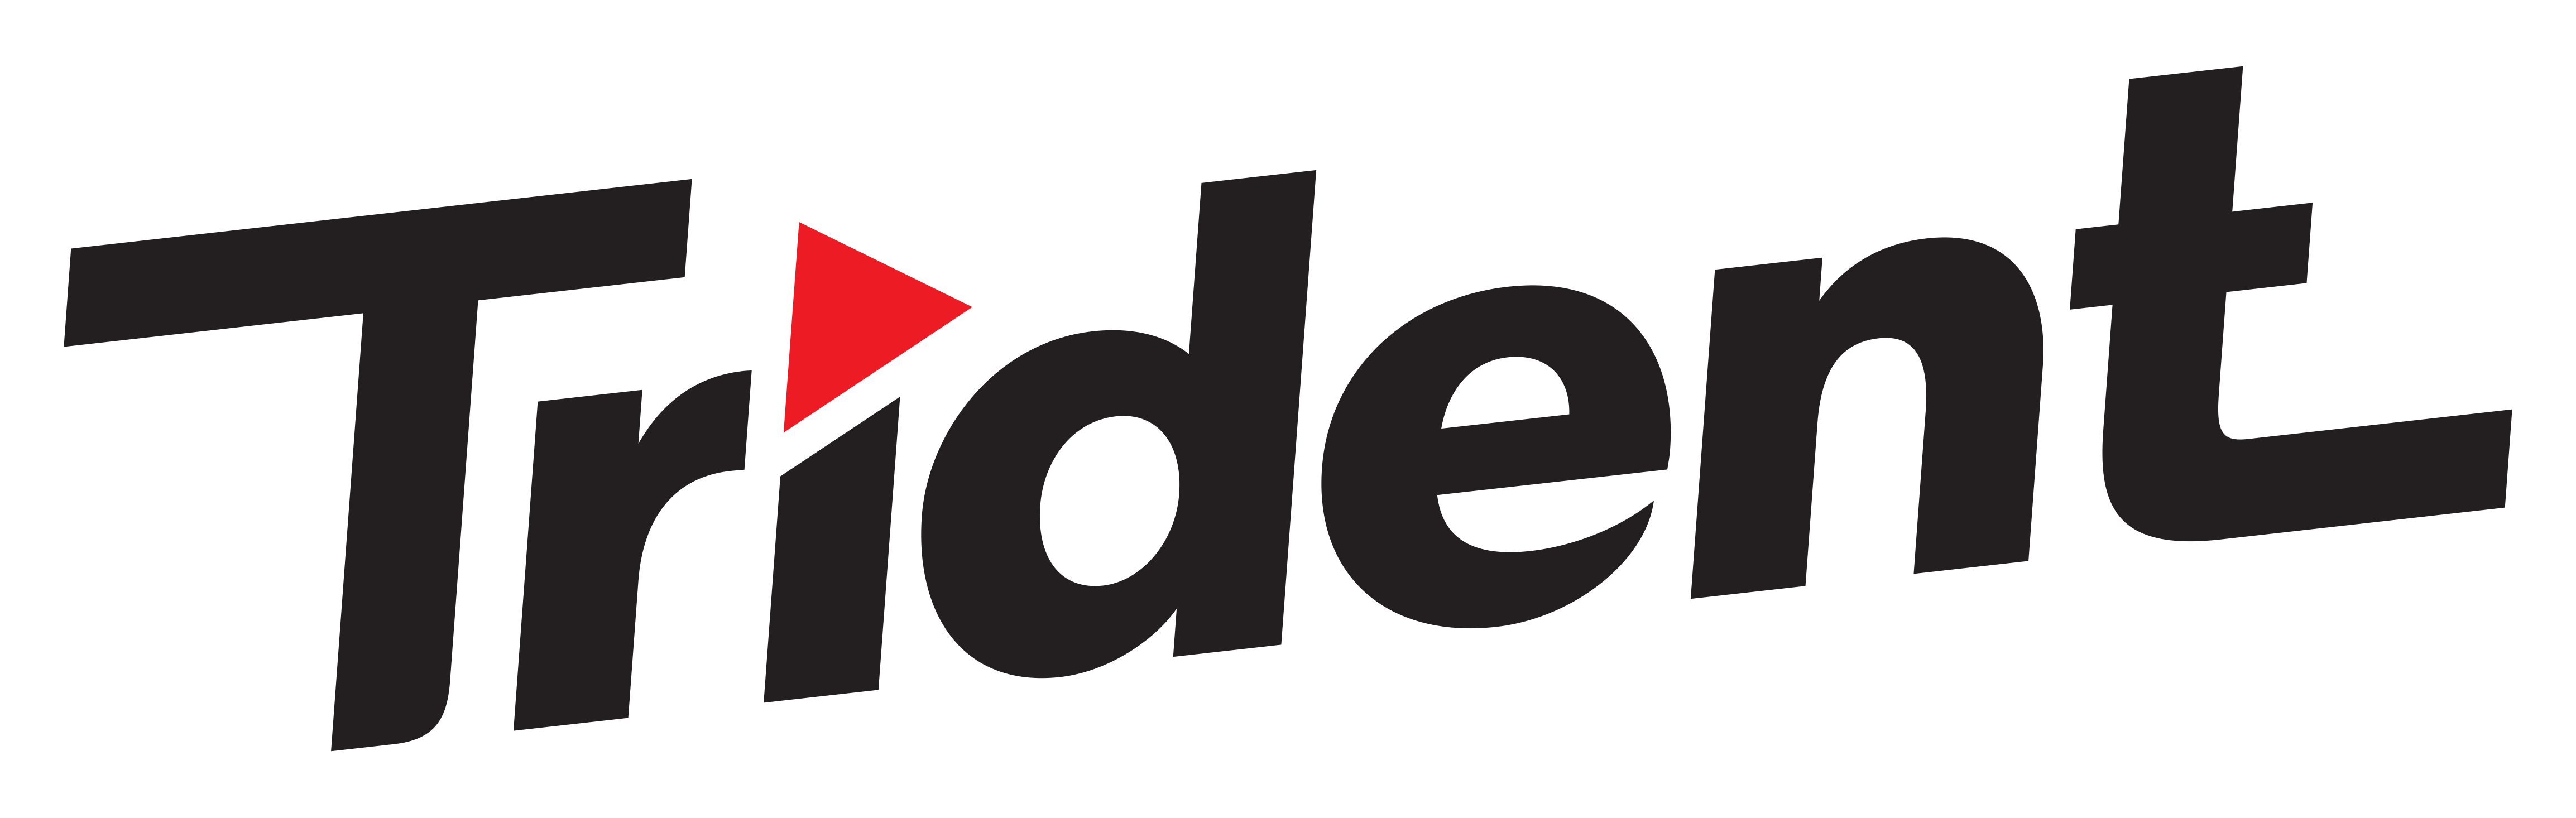 trident clipart logo